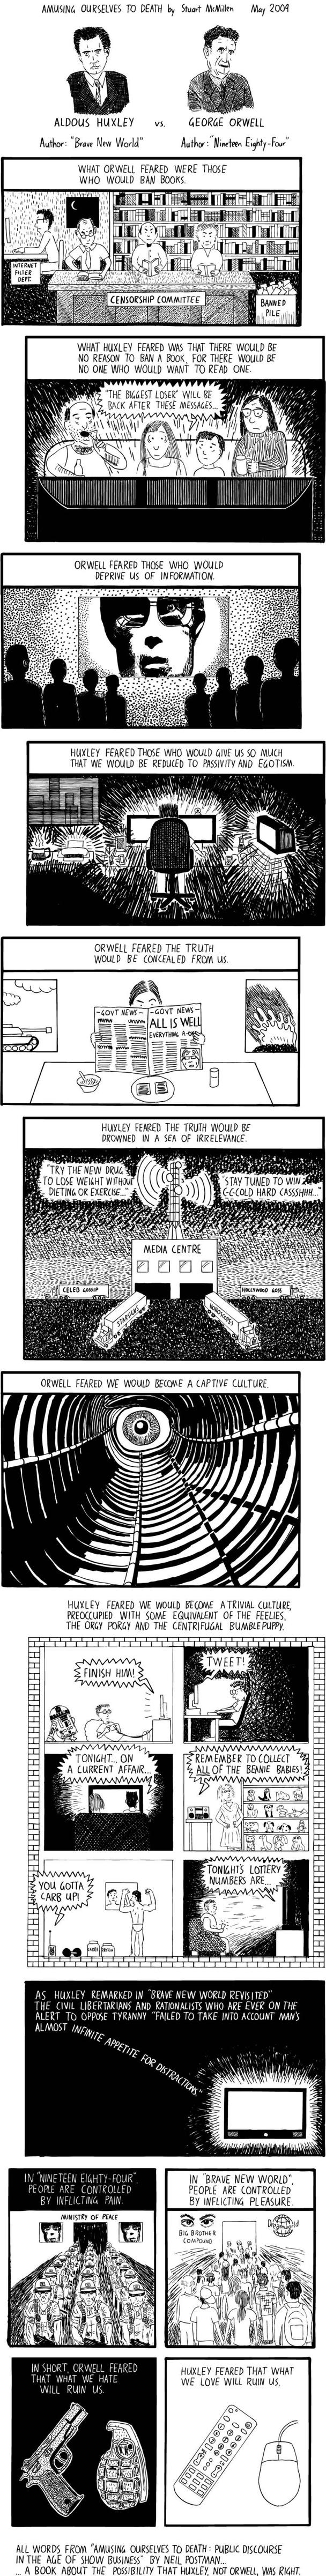 Huxley Versus Orwell Comic